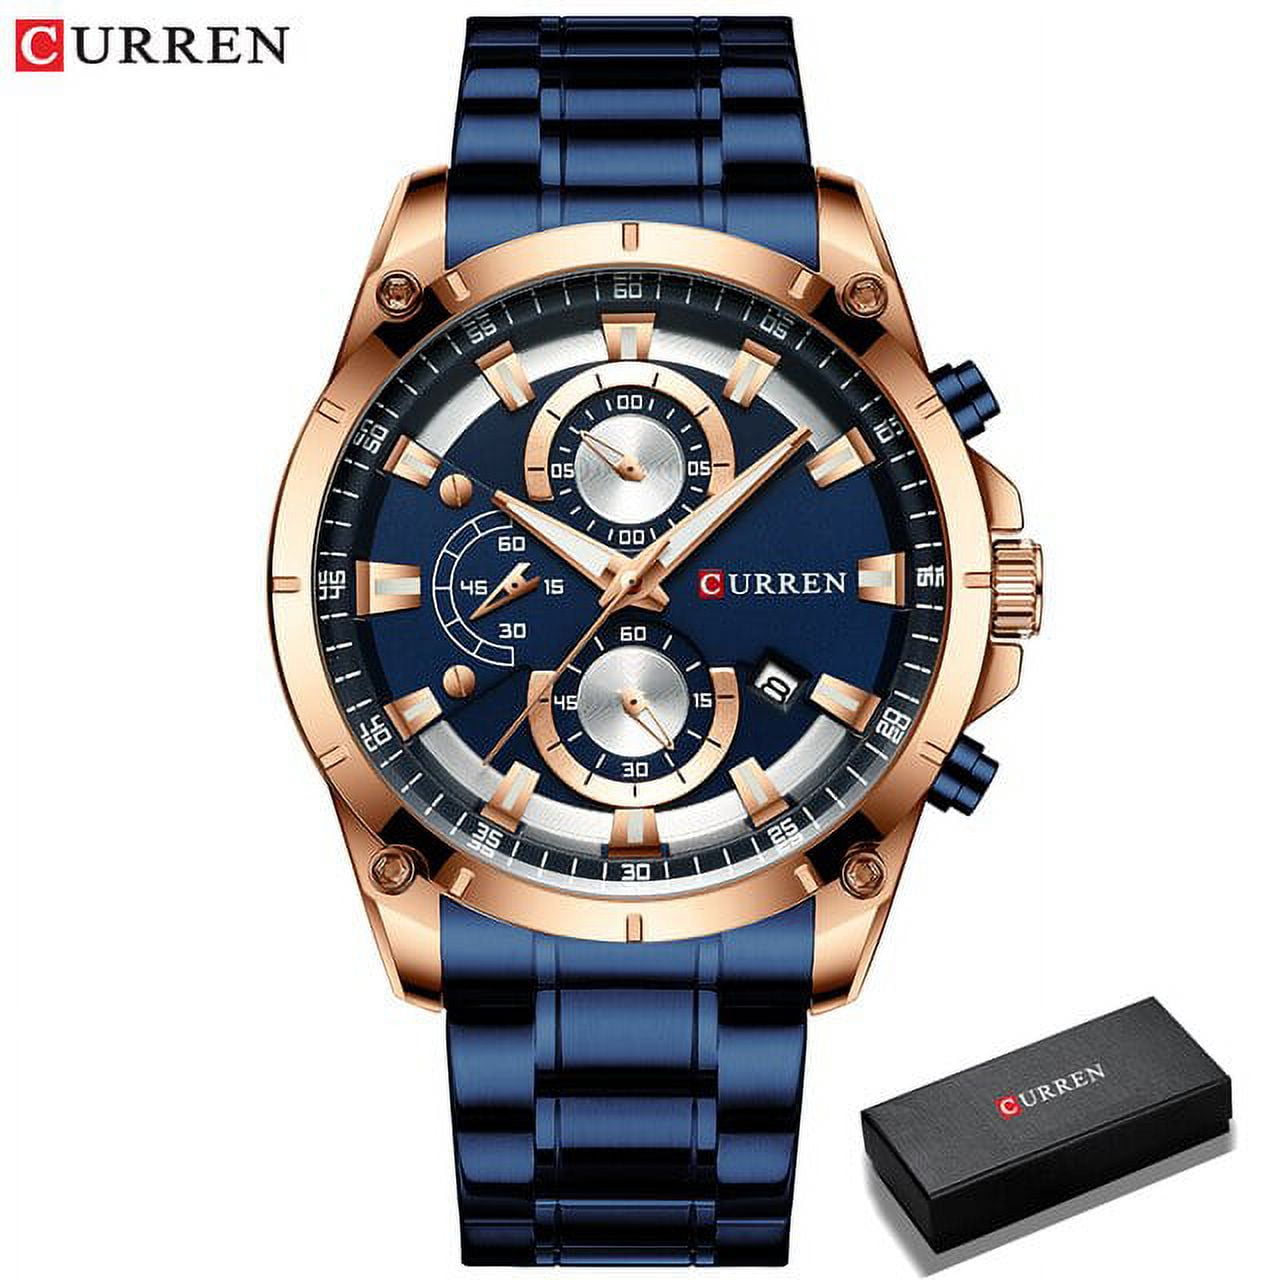 Curren Men's Chronograph Wrist Watches Price & Online Catalog